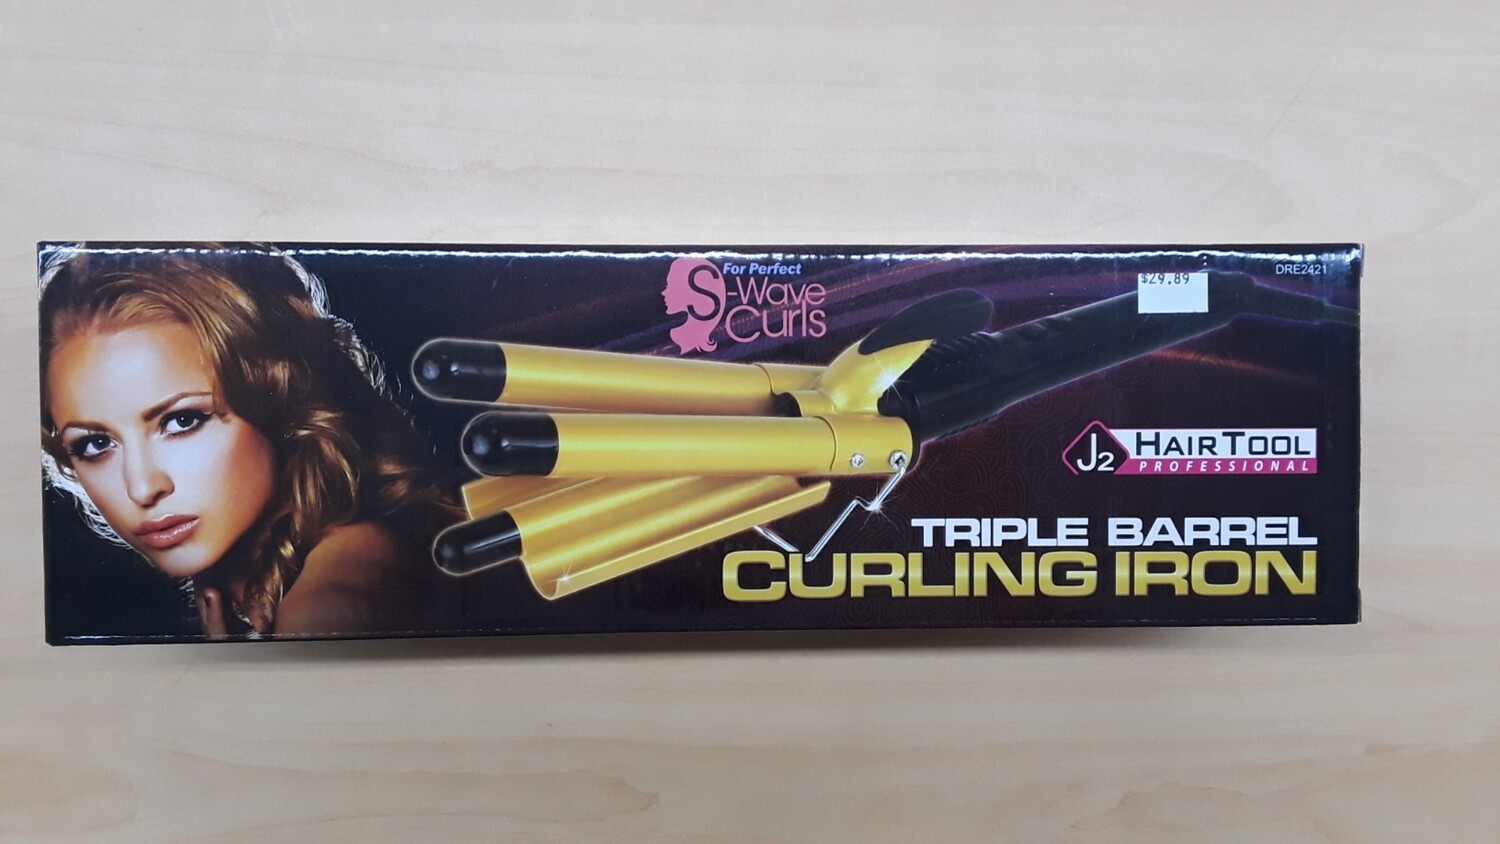 J2 Hair Tool Professional Triple Barrel Curling Iron